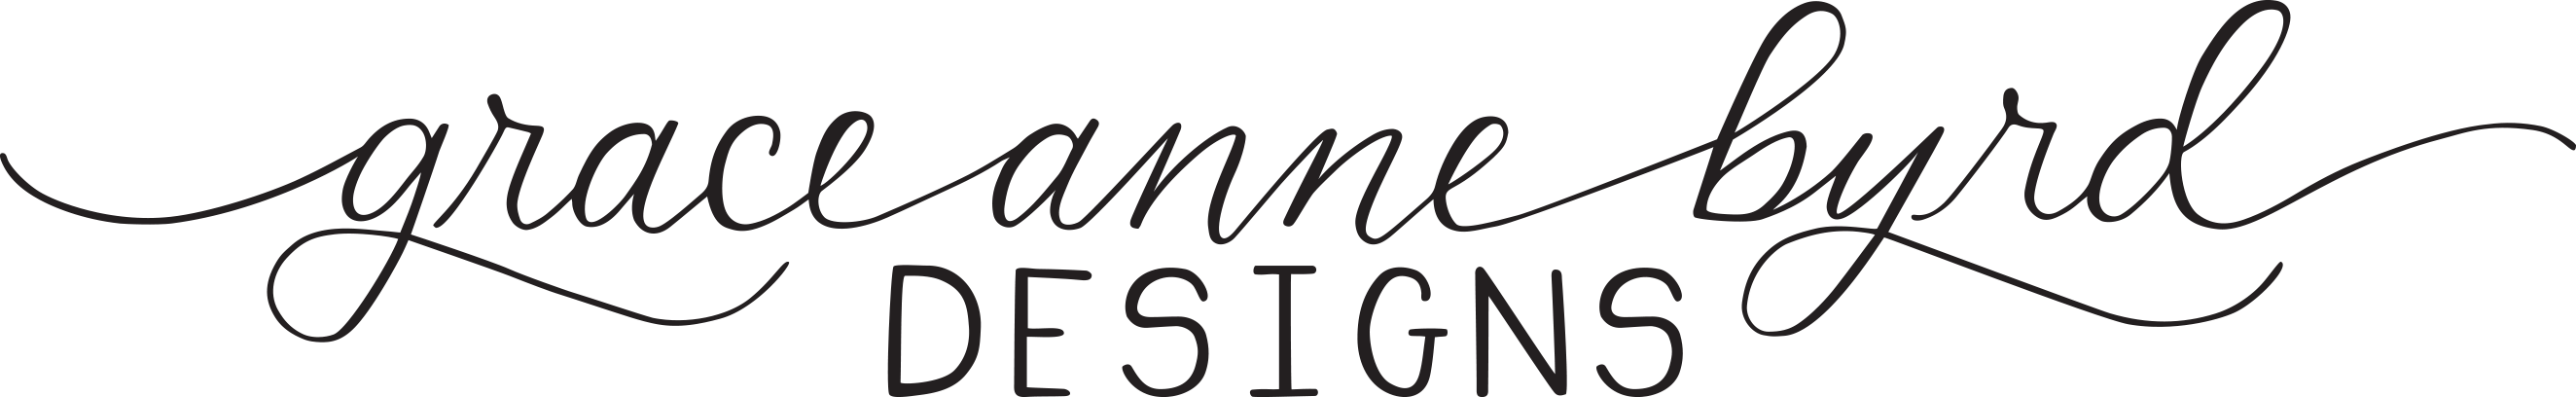 Grace Anne Byrd Designs logo